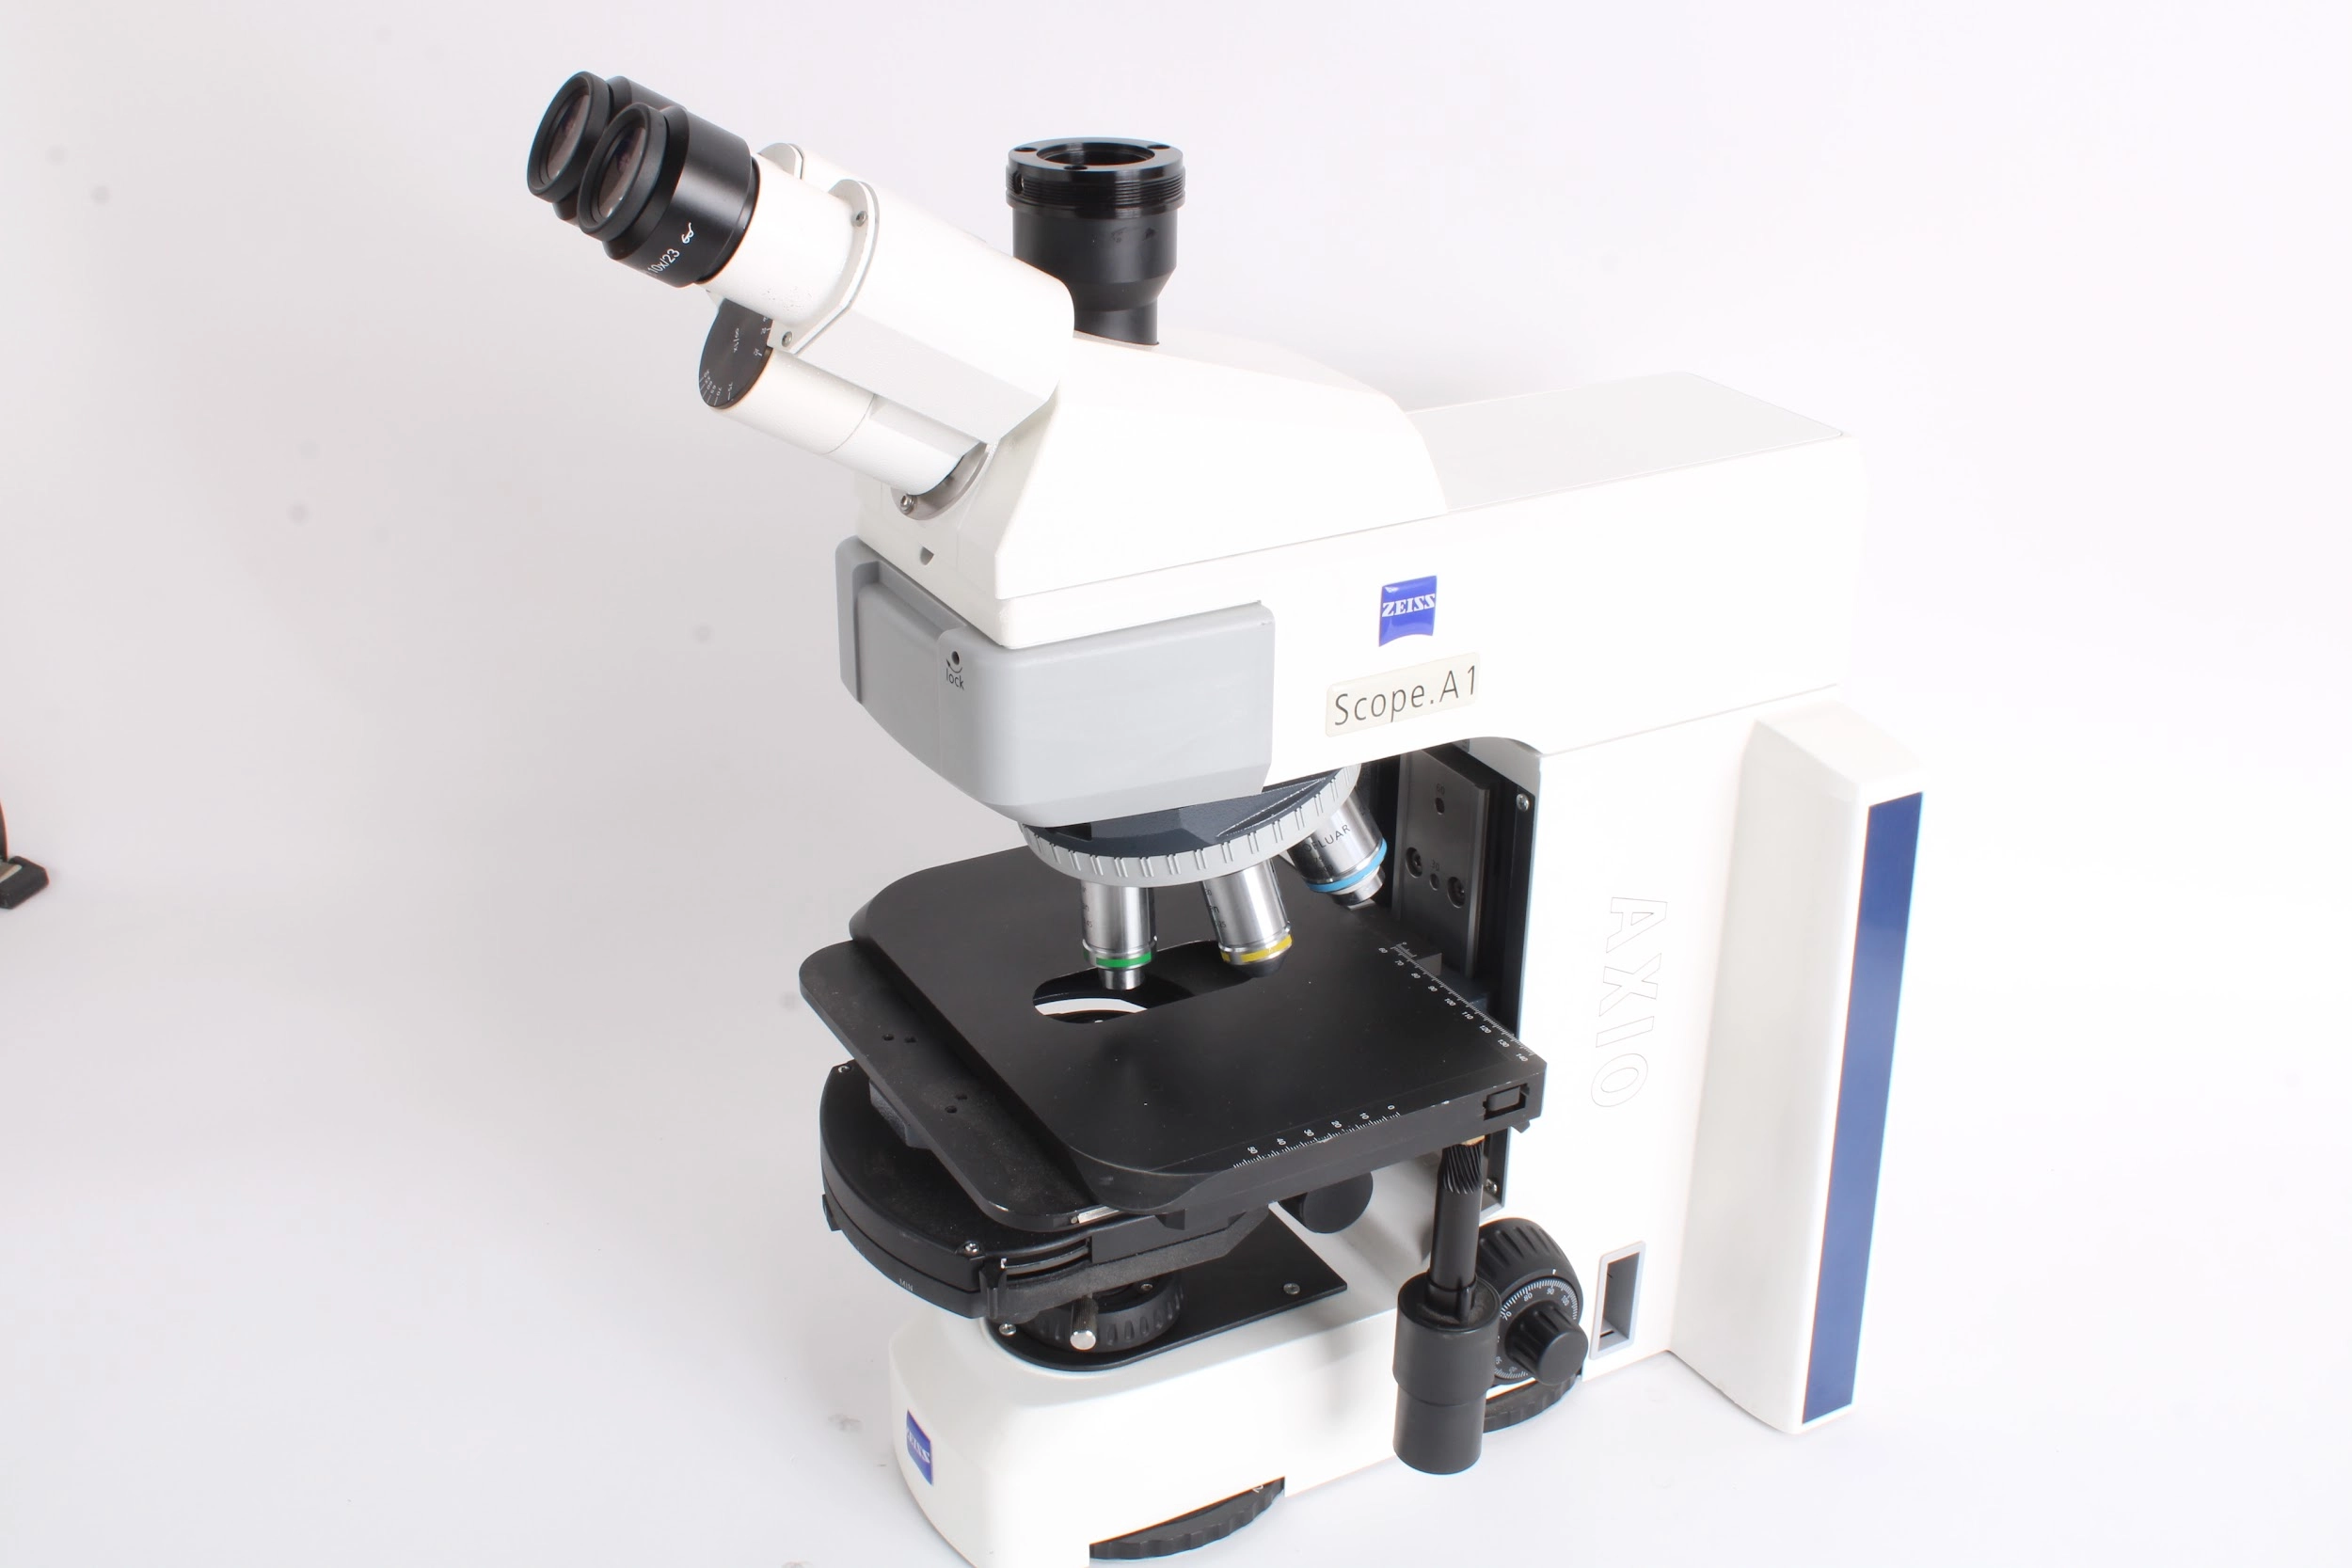 Zeiss Axio Scope.A1 Trinocular Pathology Microscope 430035-9030-000 + Objectives